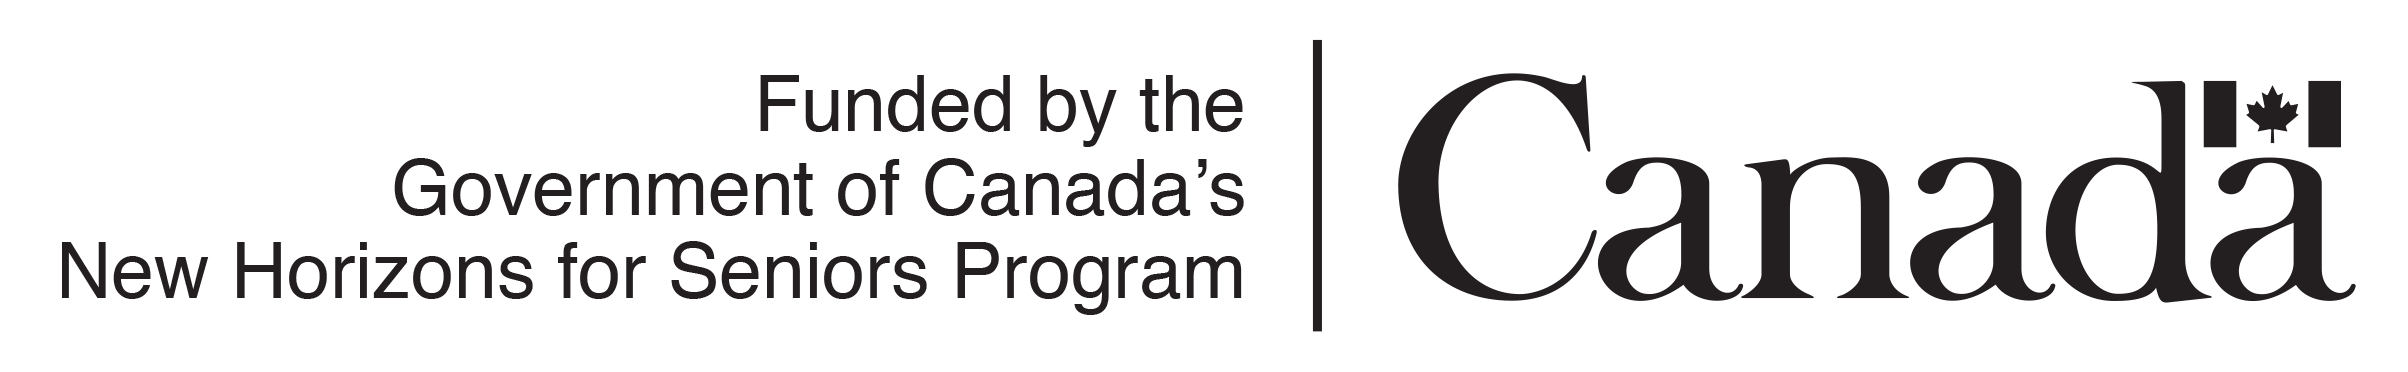 Government of Canada's New Horizons for Seniors Program